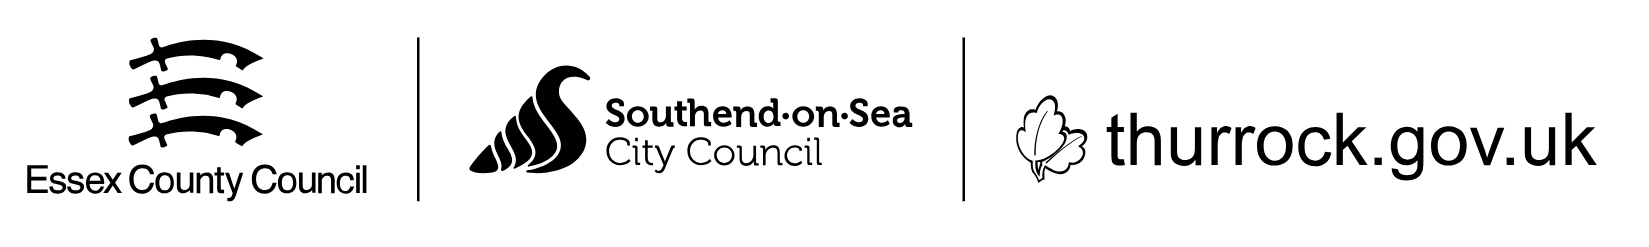 Logos for ECC, Southend and Thurrock councils